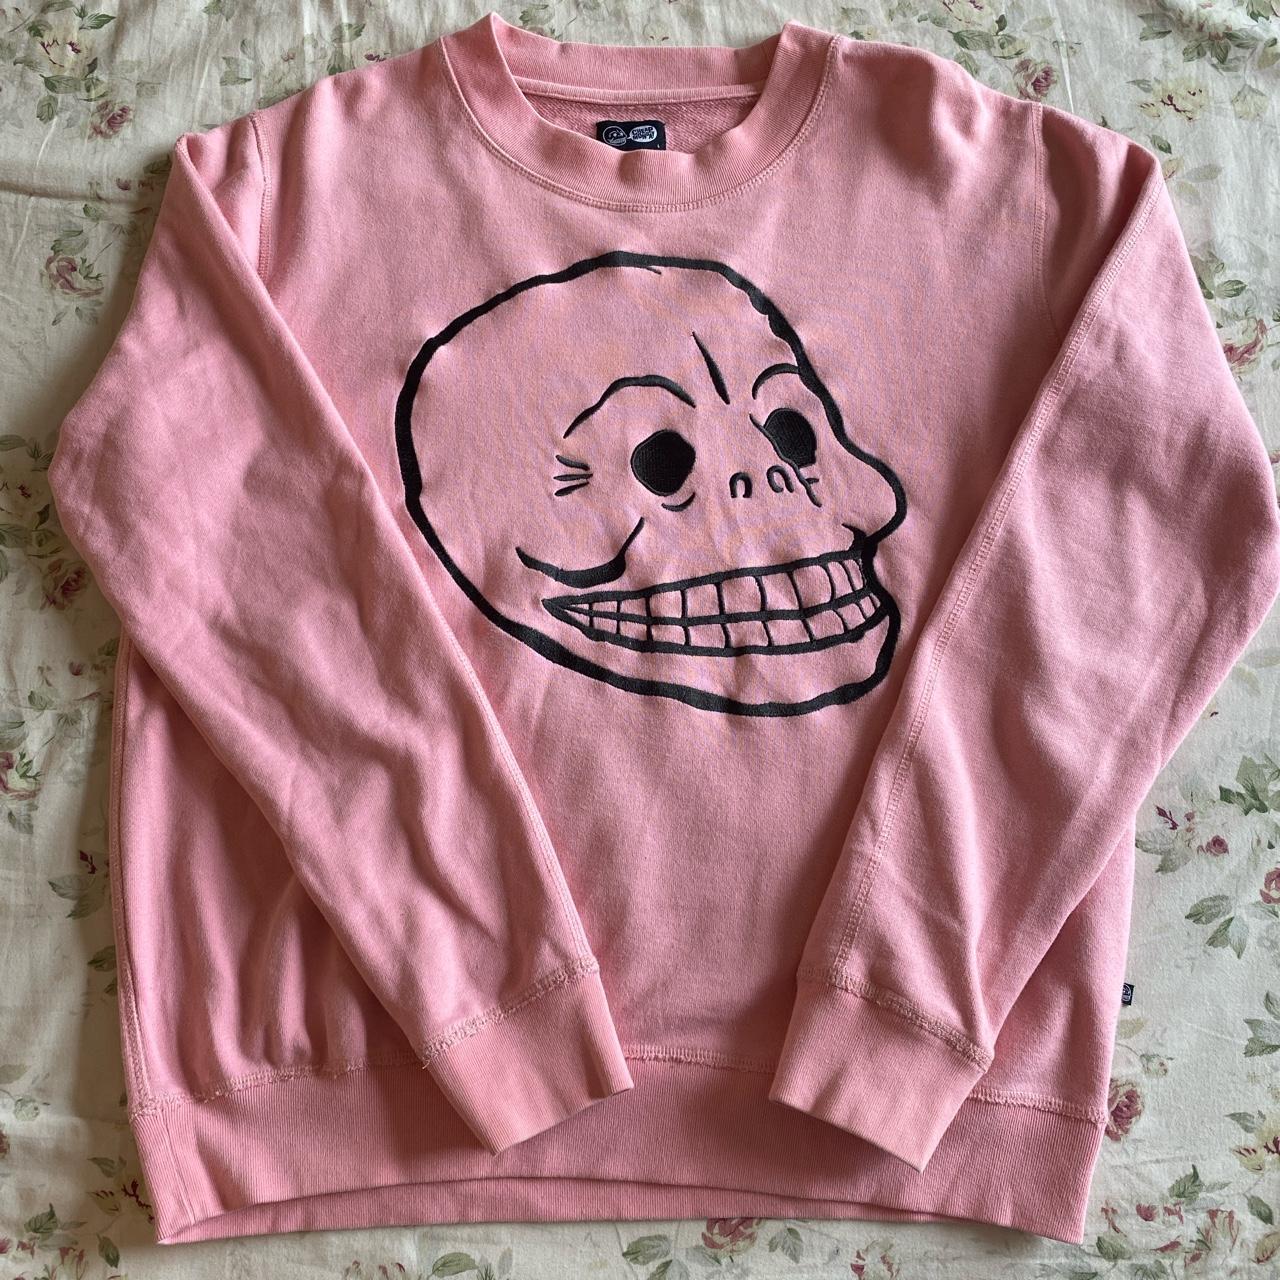 Cheap Monday Women's Black and Pink Sweatshirt